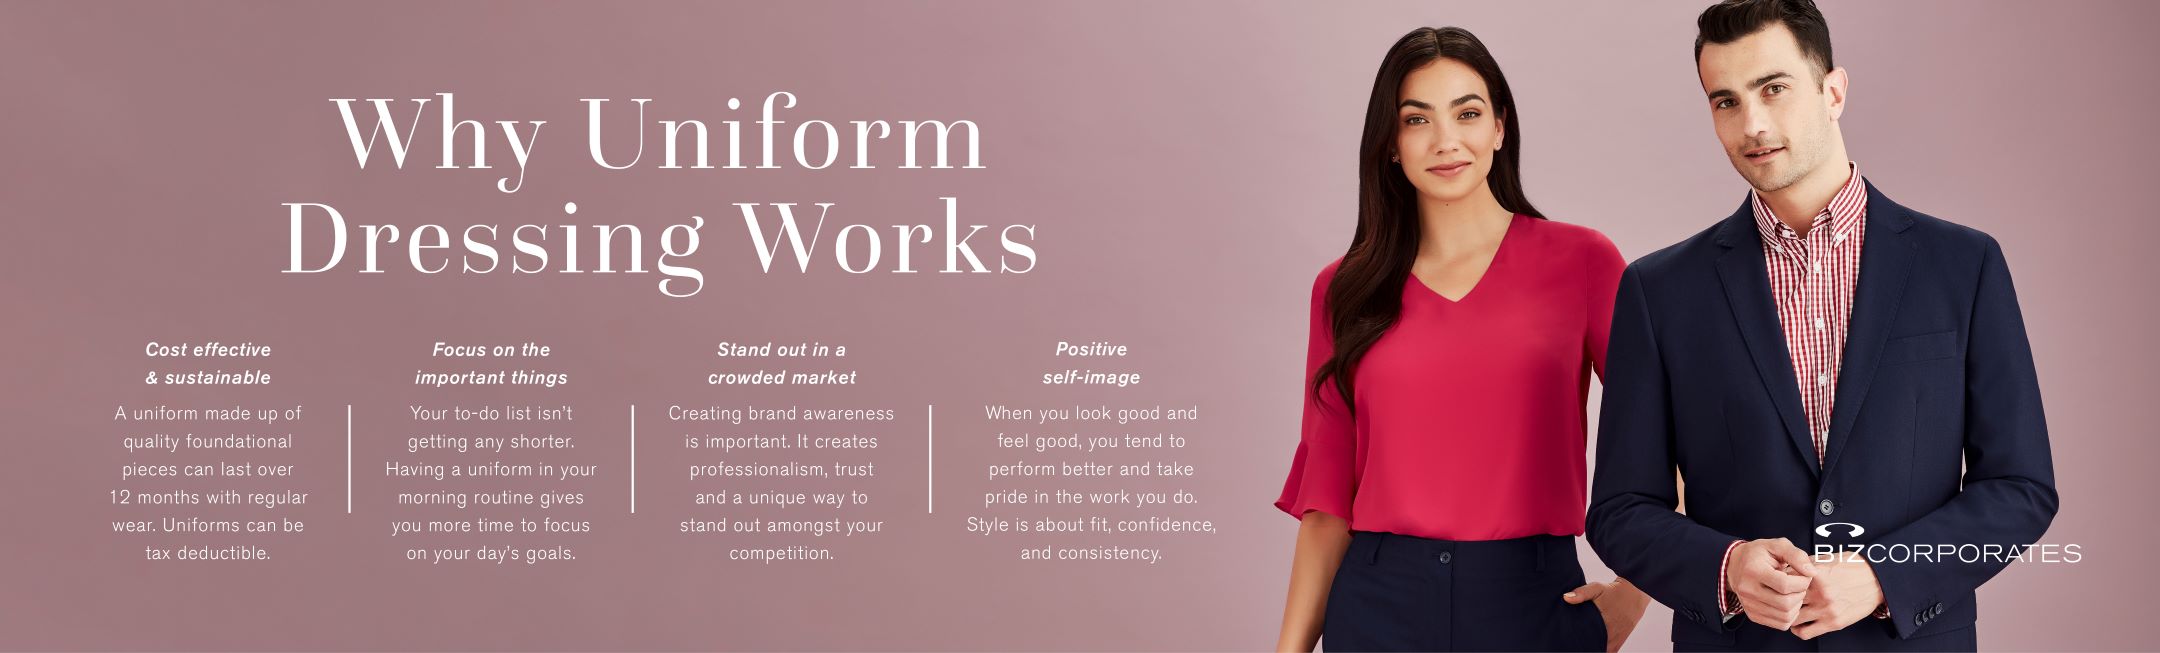 Biz Corporates Why Uniform Dressing Works Web Banner